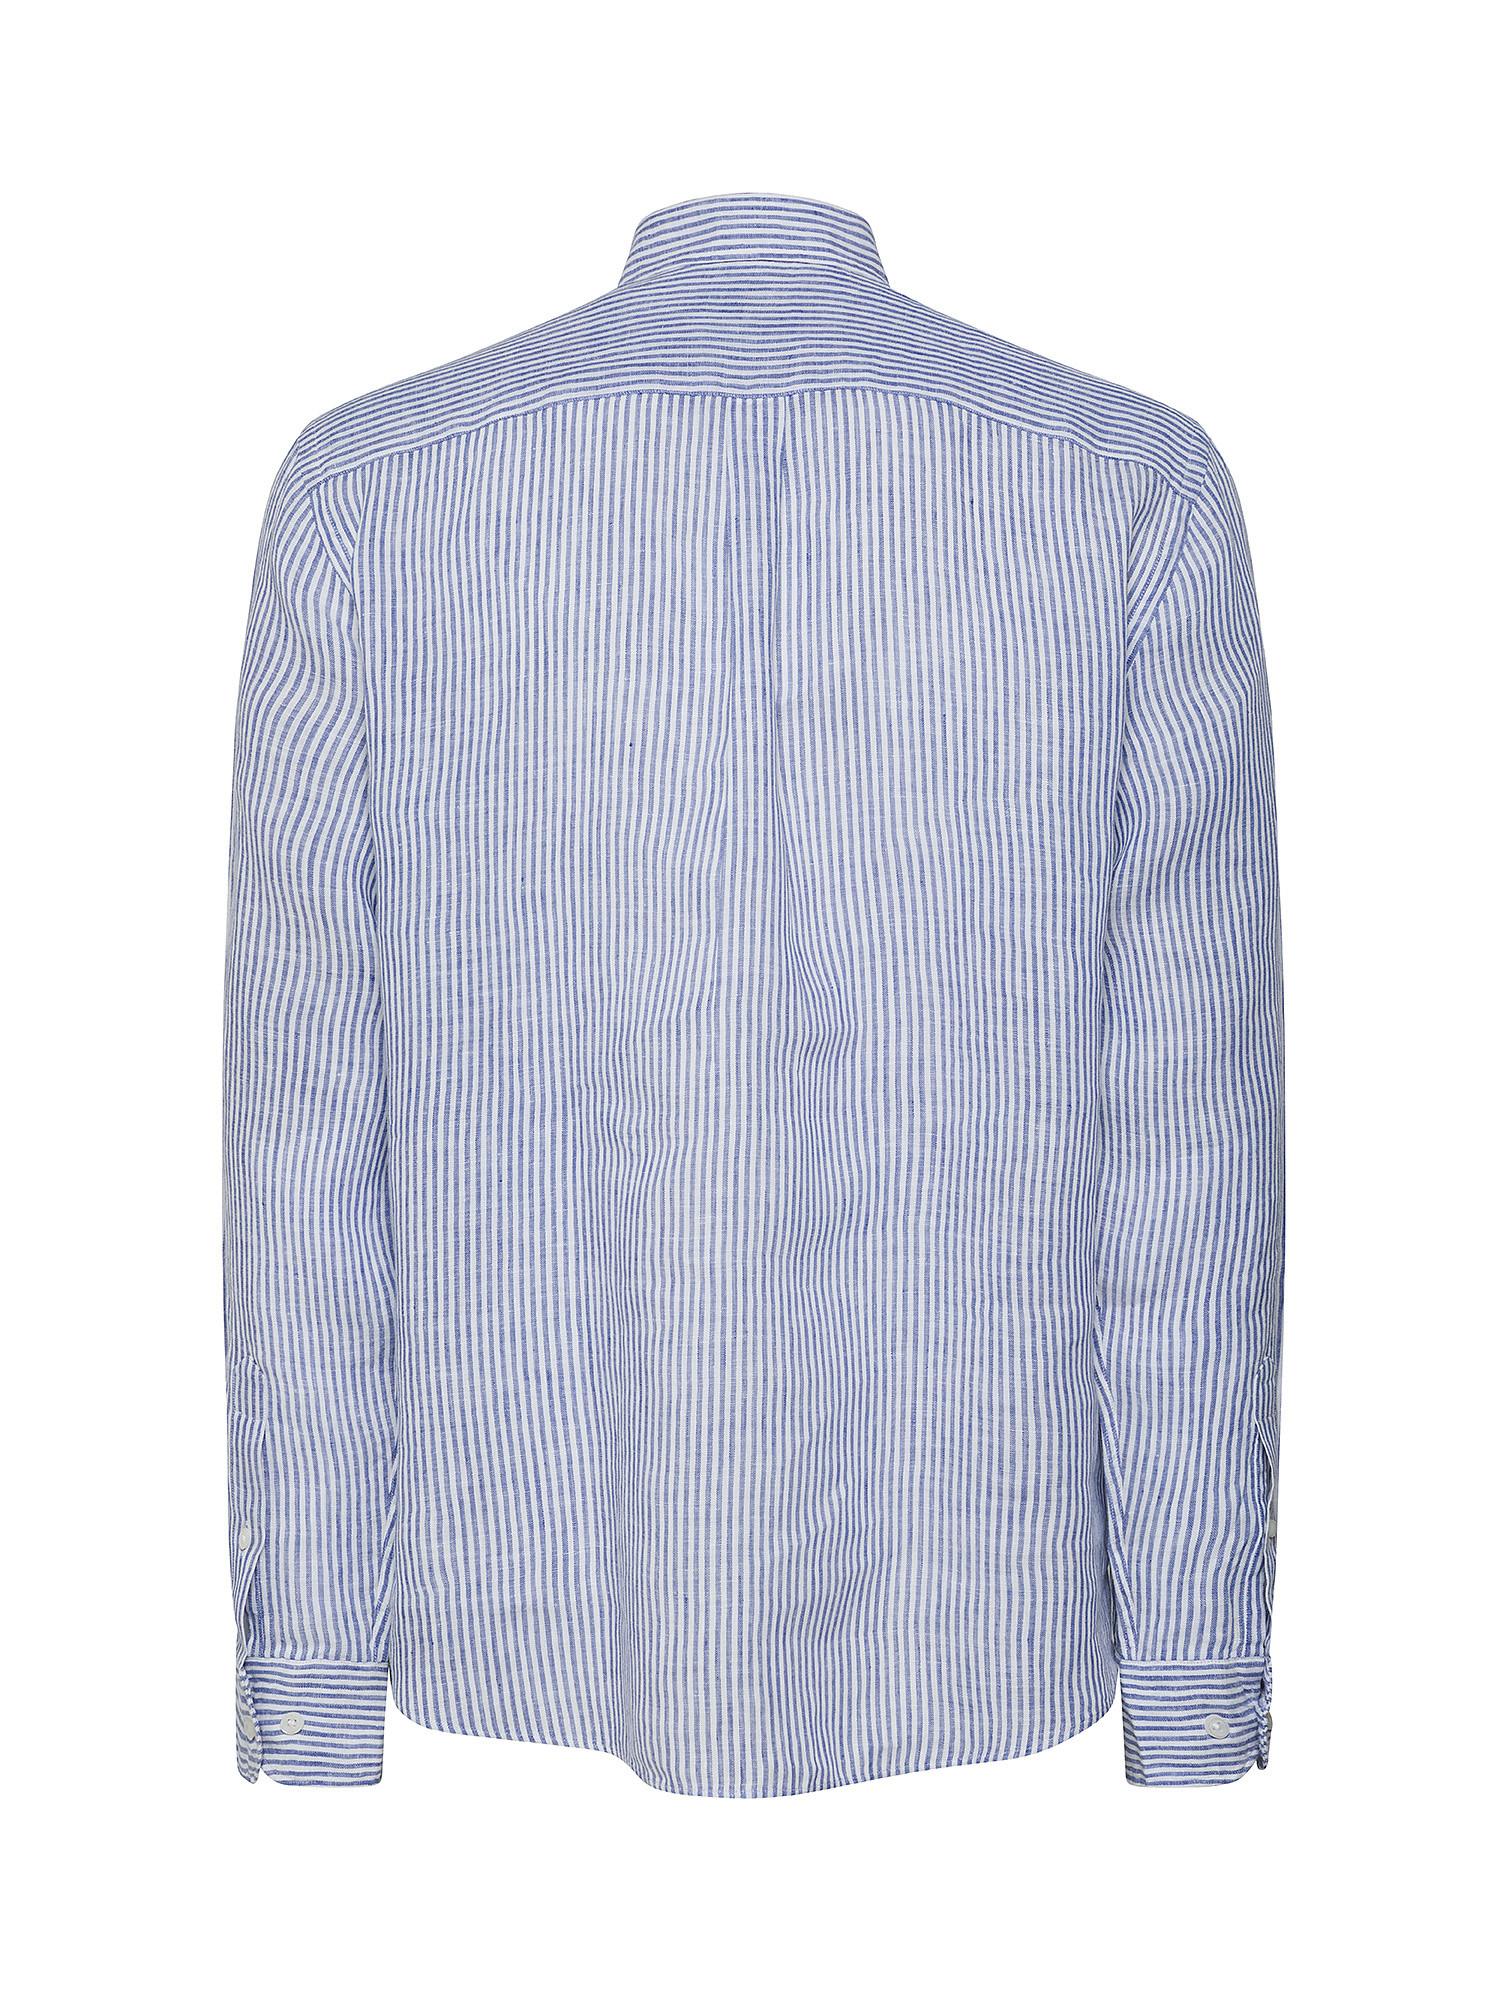 Luca D'Altieri - Tailor fit shirt in pure linen, Blue, large image number 1